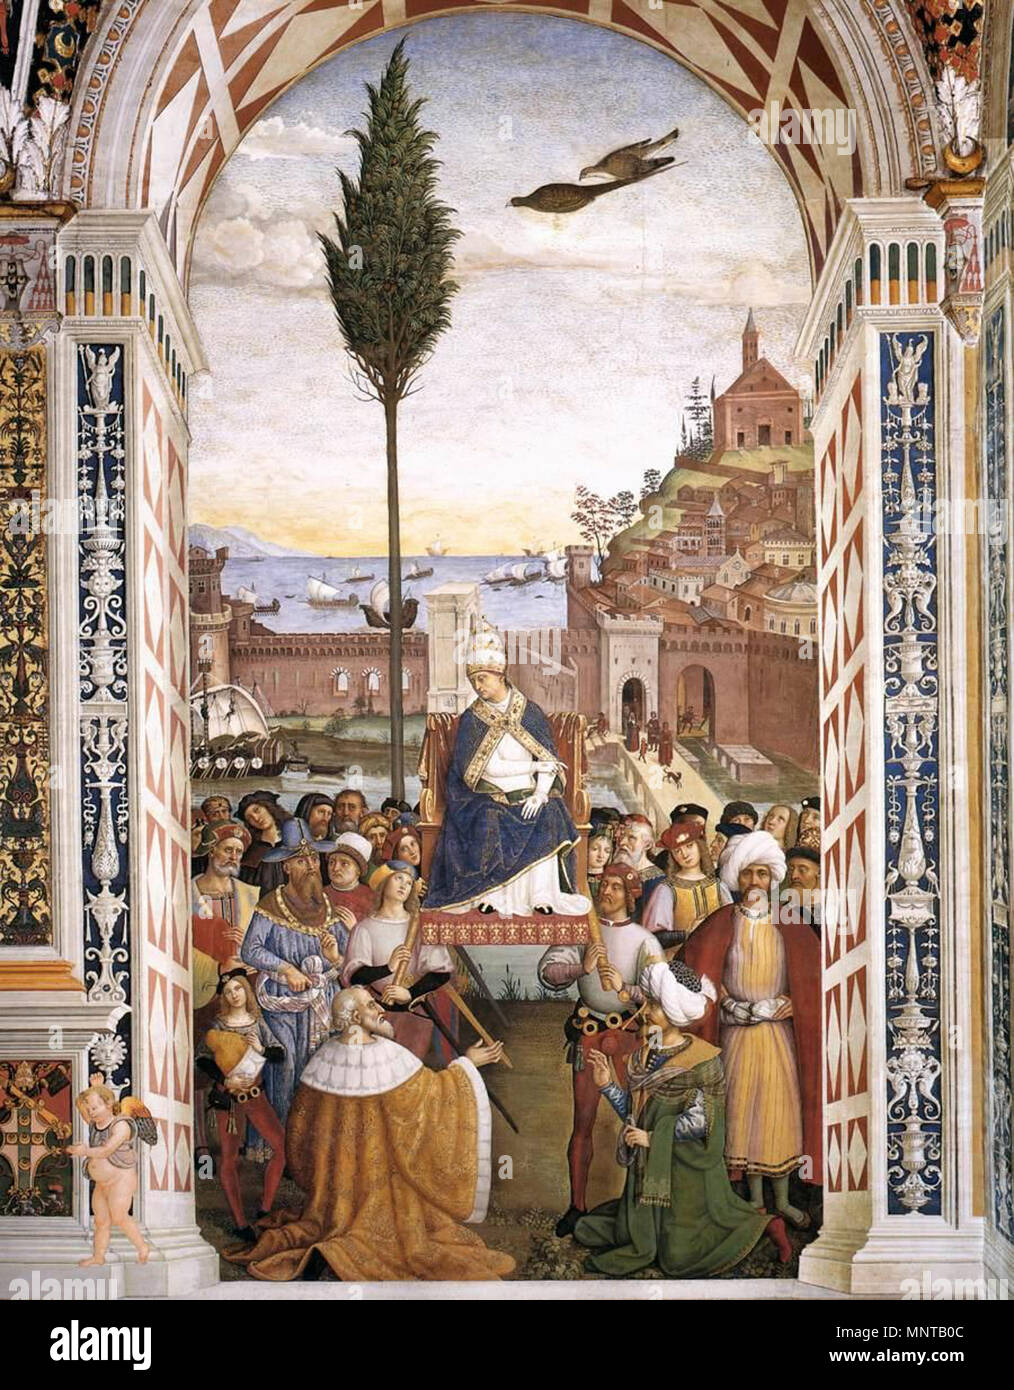 Inglese: No. 10: il Papa Pio II giunge ad Ancona tra 1502 e 1508. 999 Pinturicchio - No. 10 - Papa Pio II arriva in Ancona - WGA17807 Foto Stock